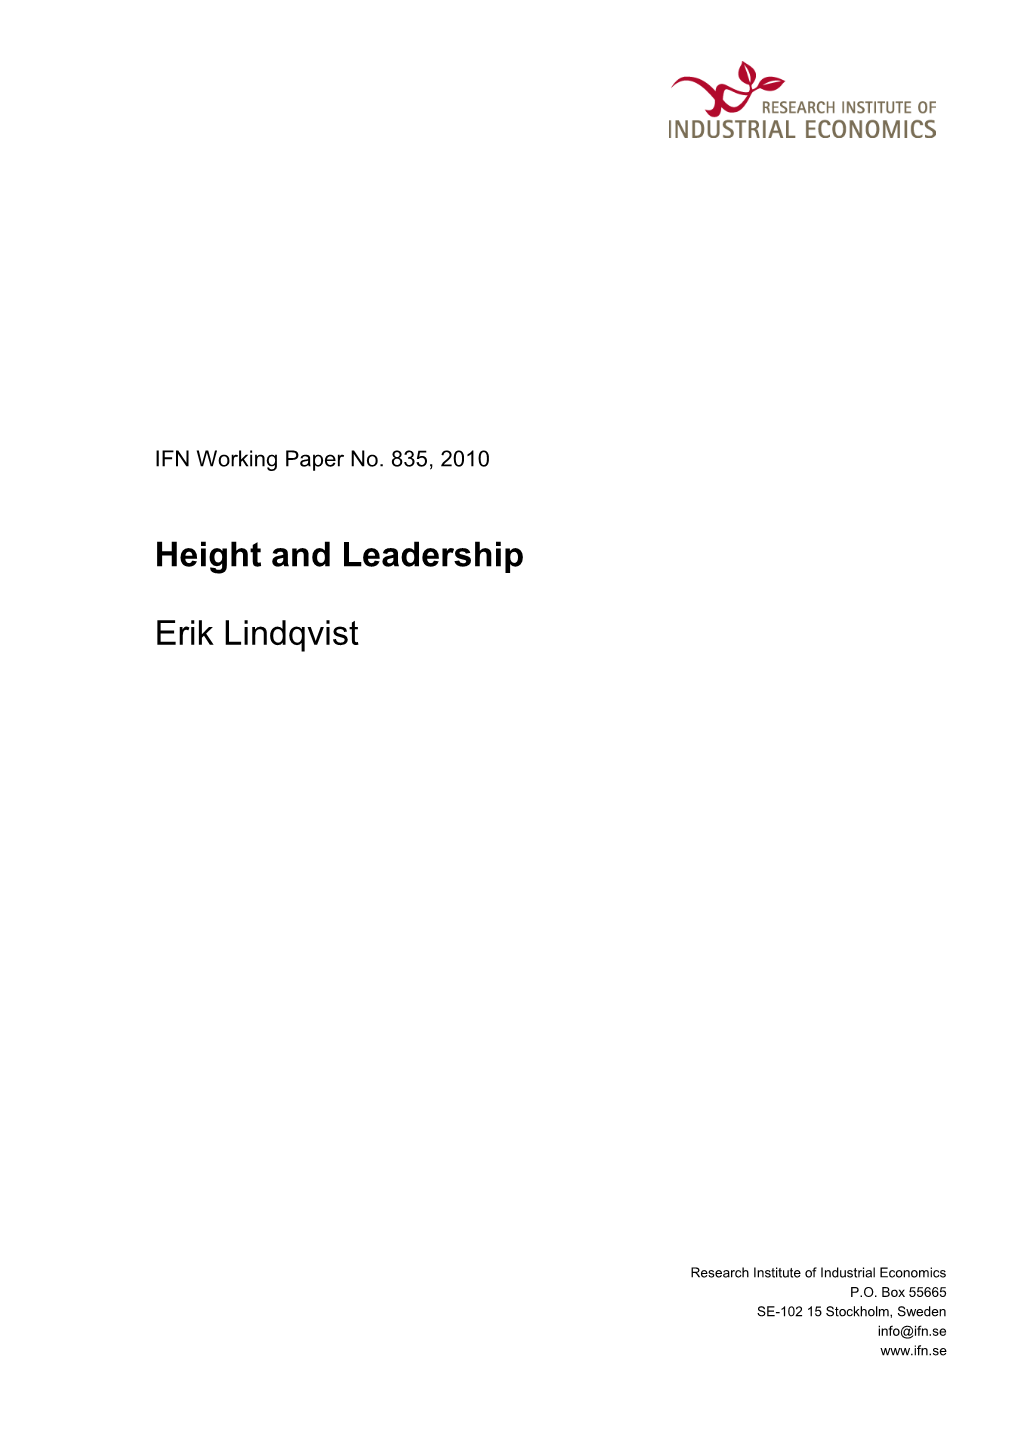 Height and Leadership Erik Lindqvist